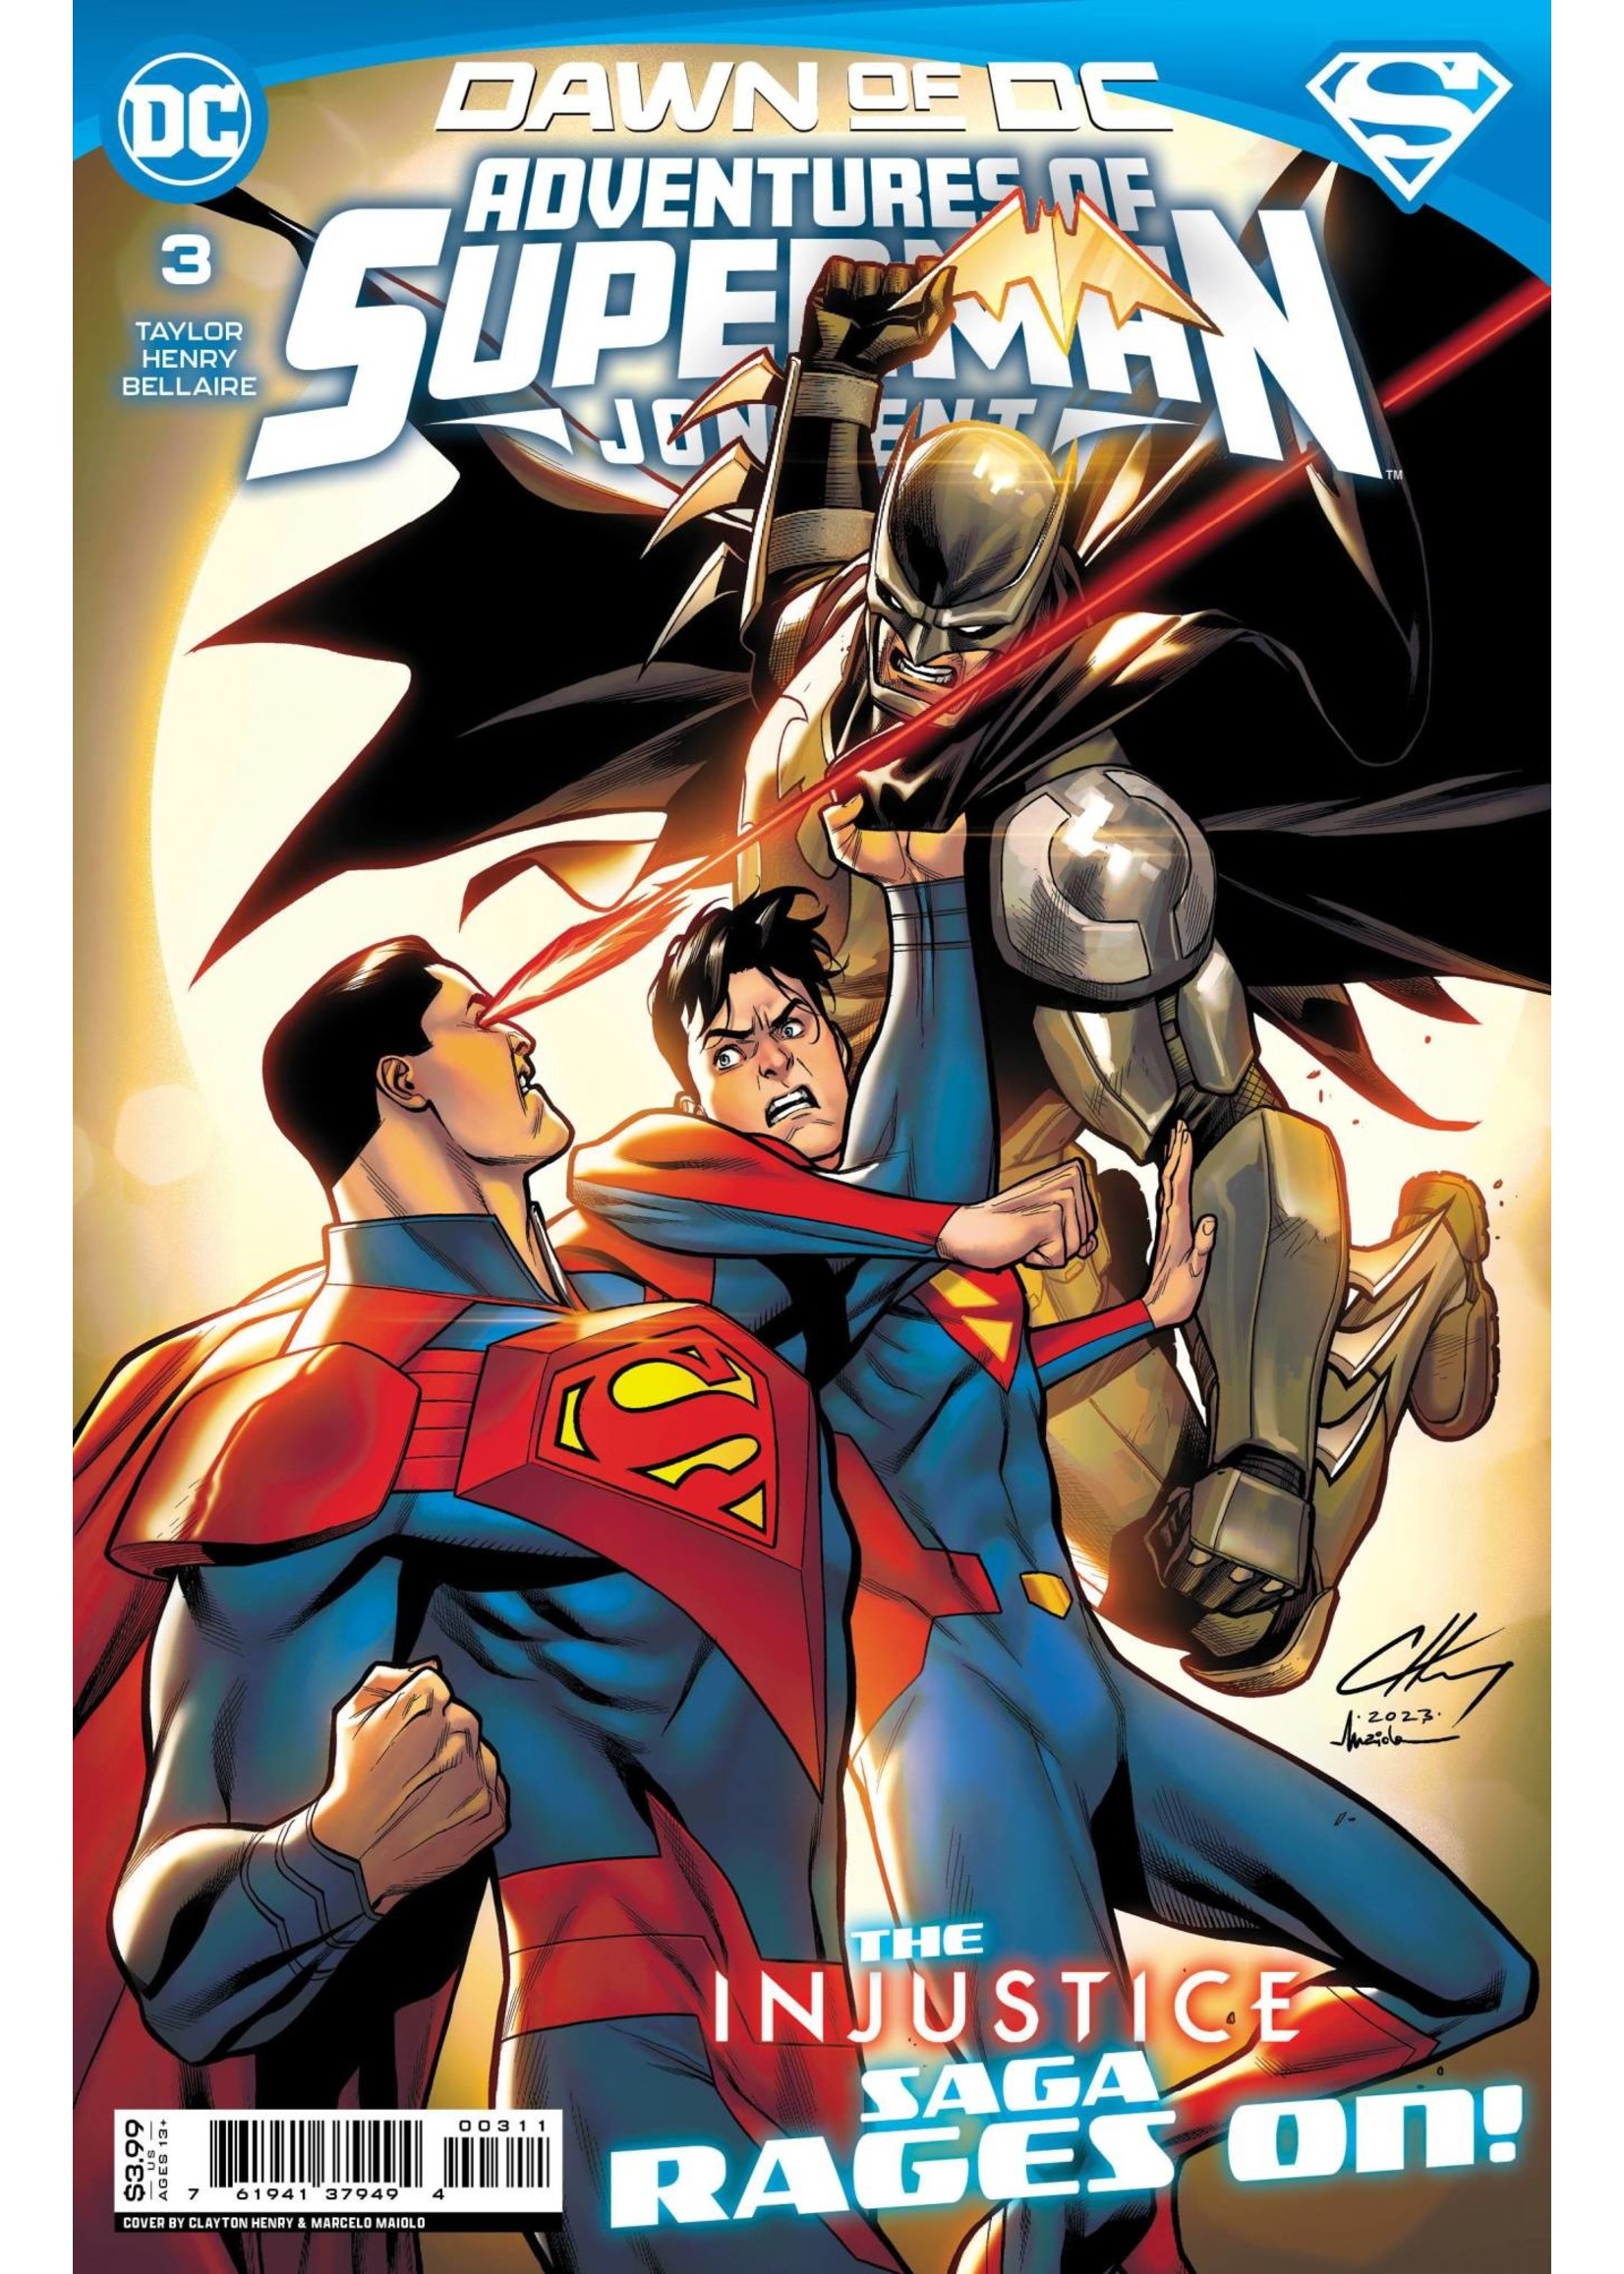 DC COMICS ADVENTURES OF SUPERMAN JON KENT #3